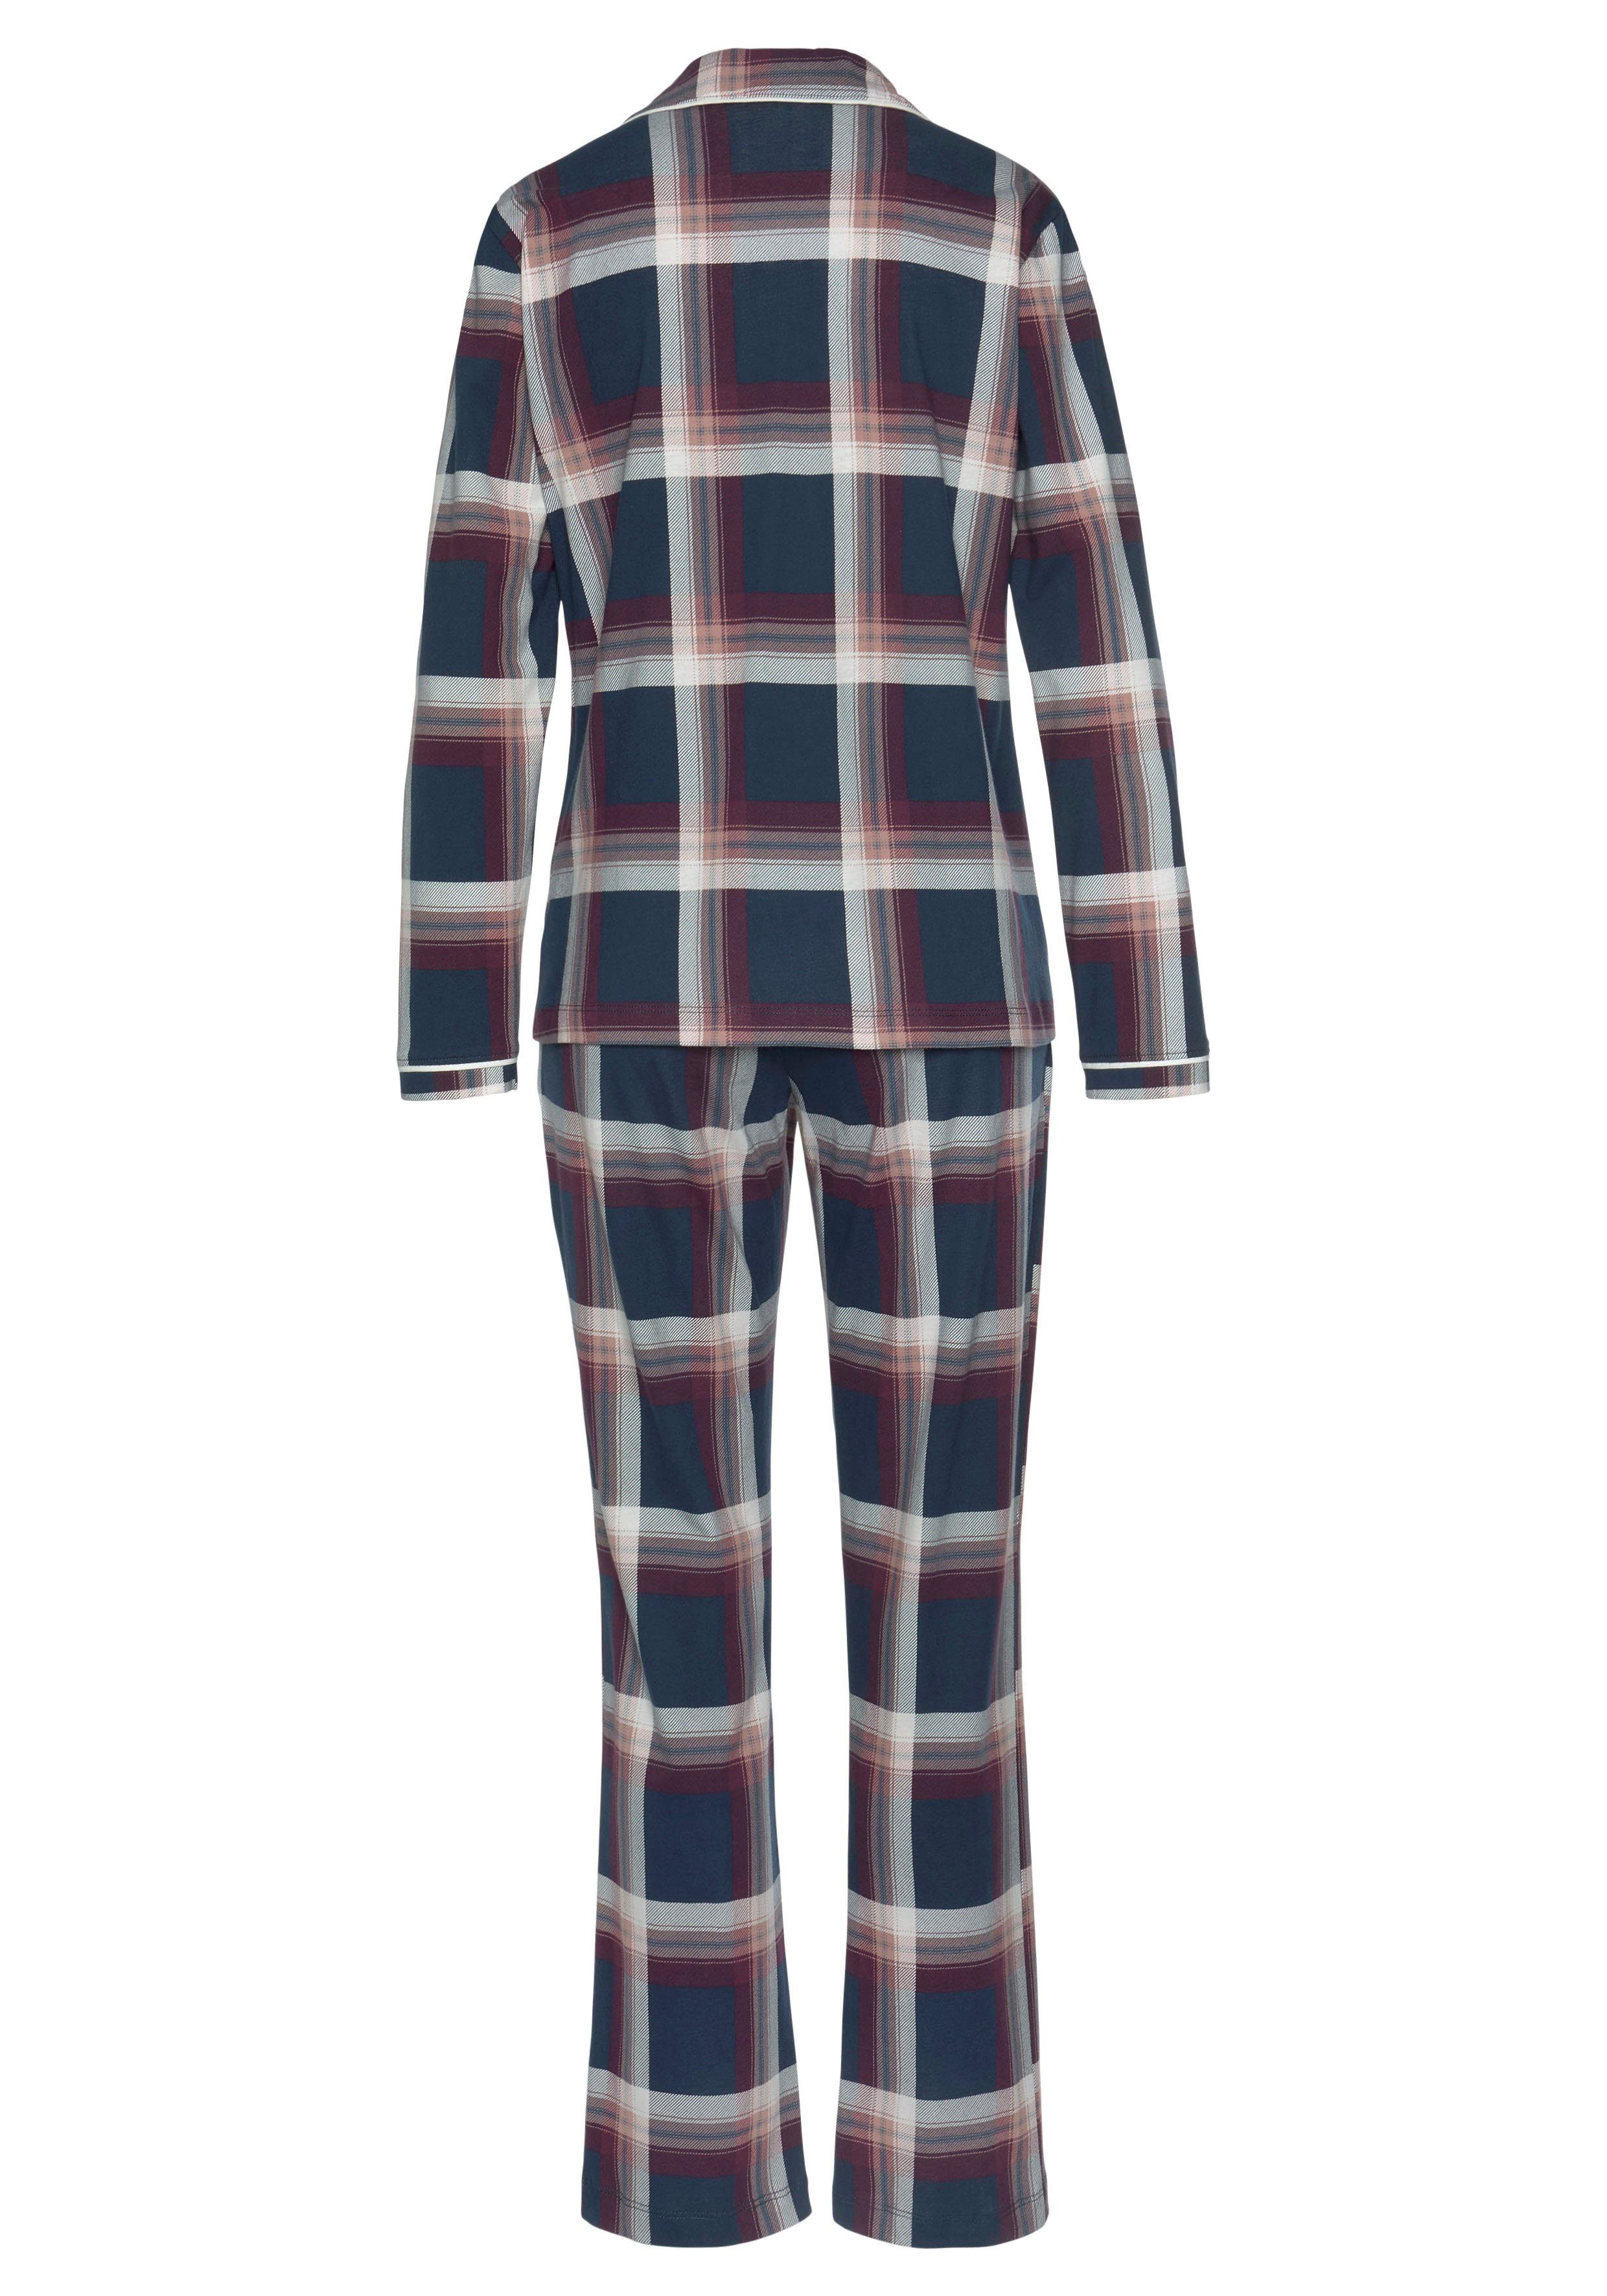 tlg) (2 s.Oliver klassischen Pyjama Karo-Muster im